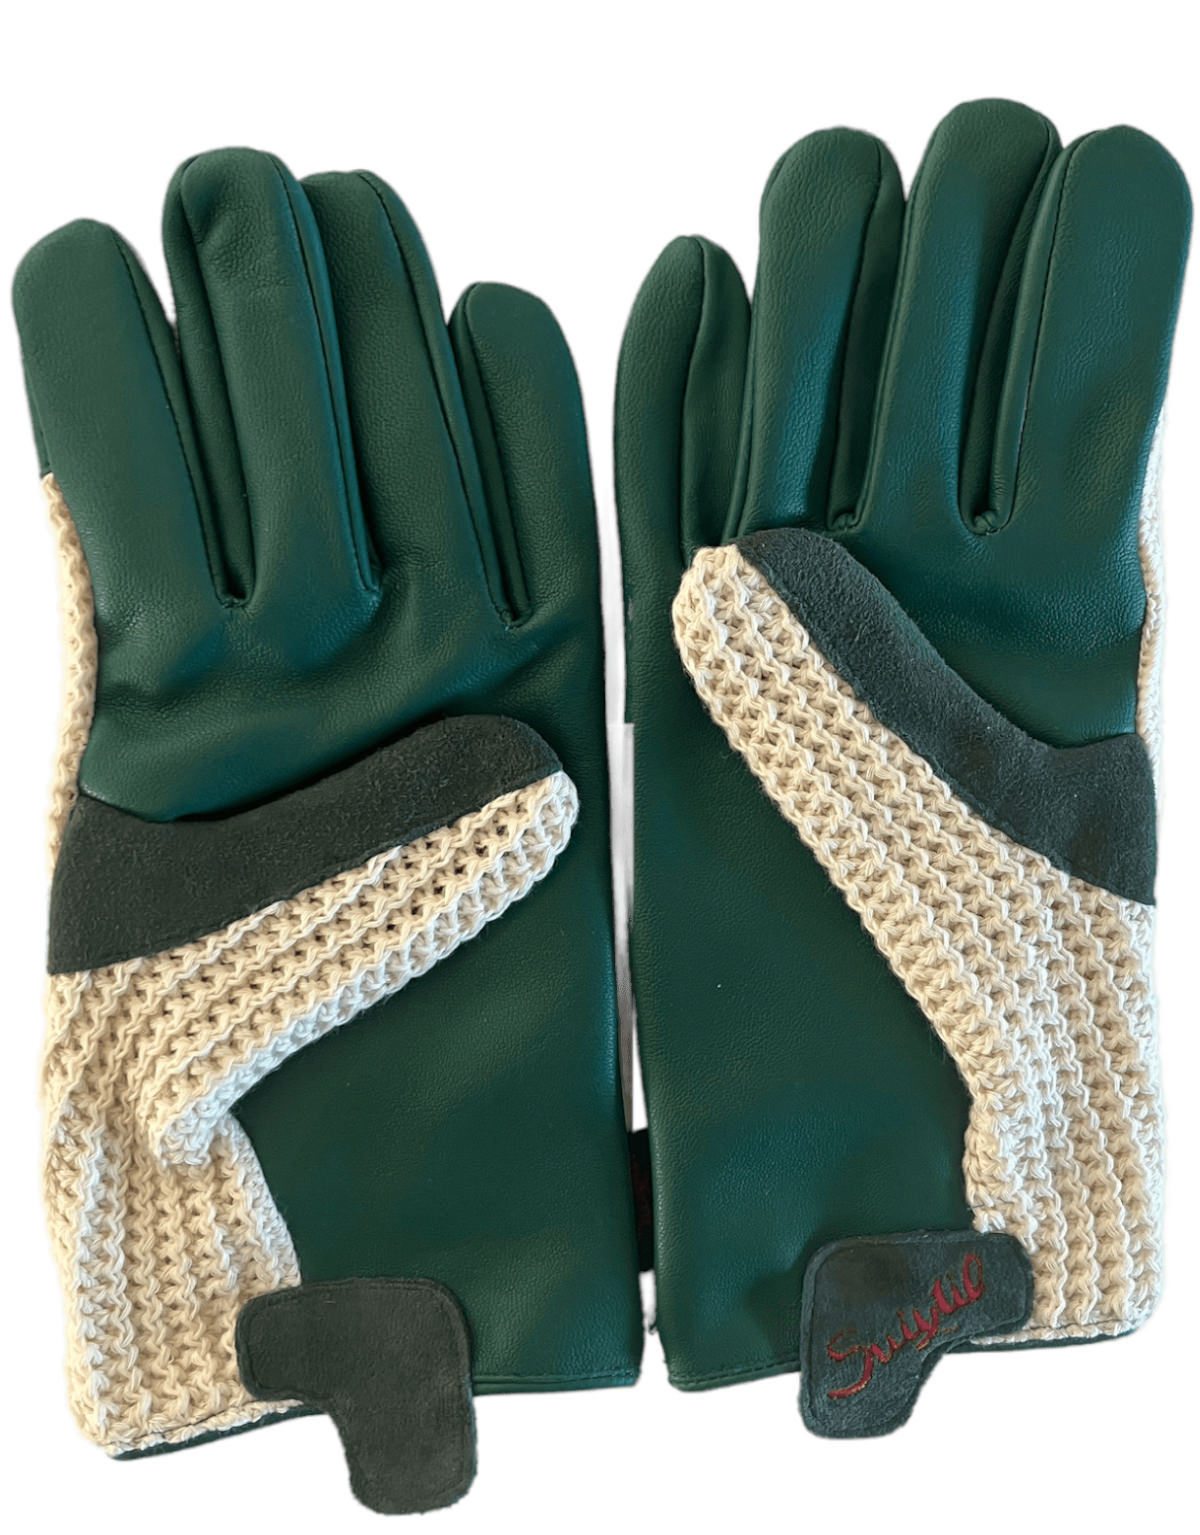 Suixtil Men’s British racing green Grand Prix race leather & cotton stringback driving gloves